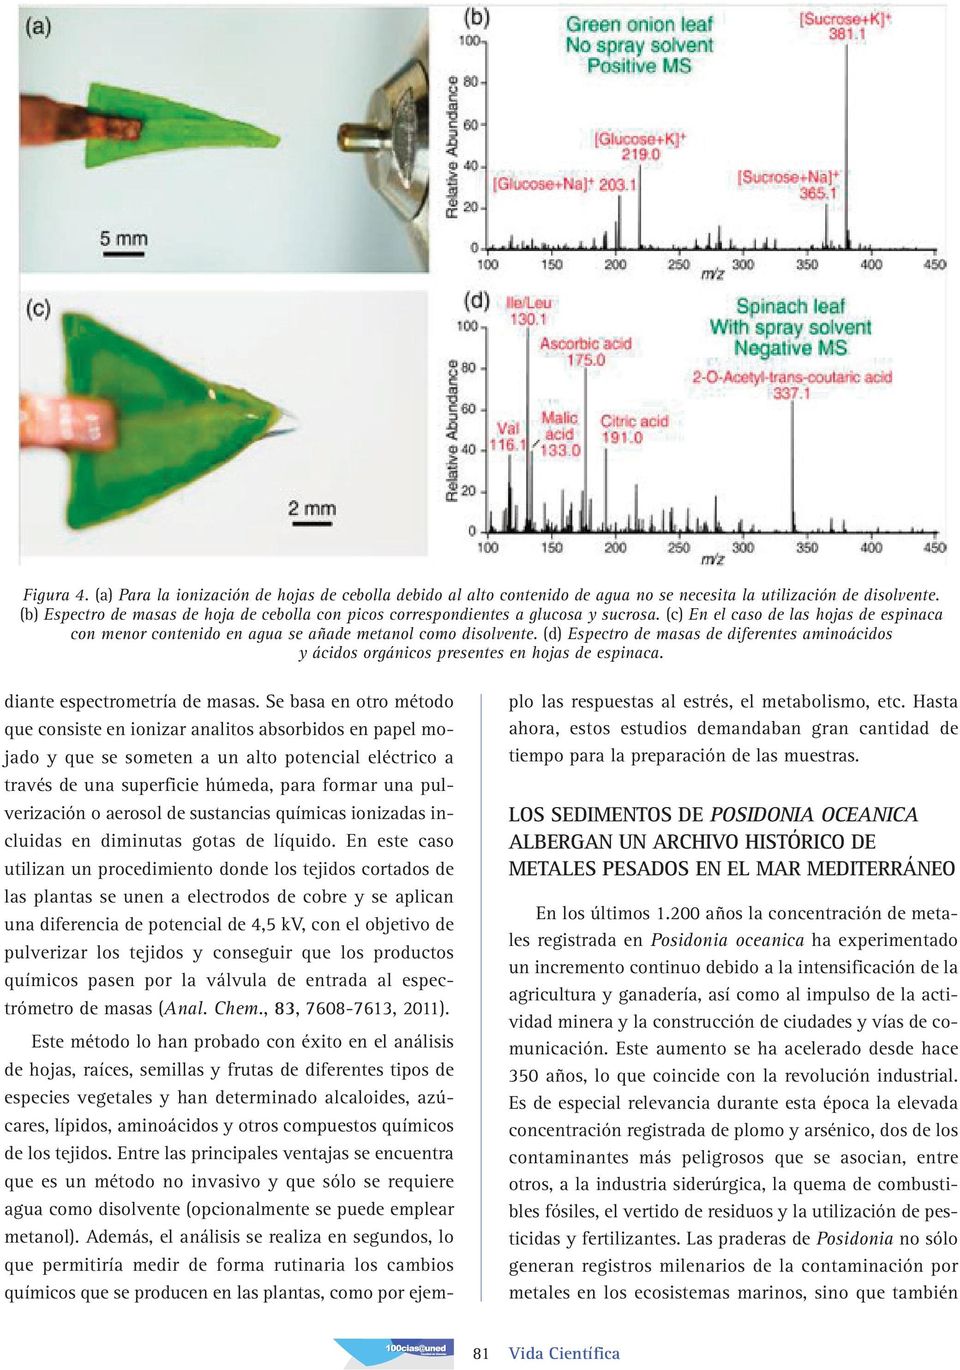 (d) Espectro de masas de diferentes aminoácidos y ácidos orgánicos presentes en hojas de espinaca. diante espectrometría de masas.